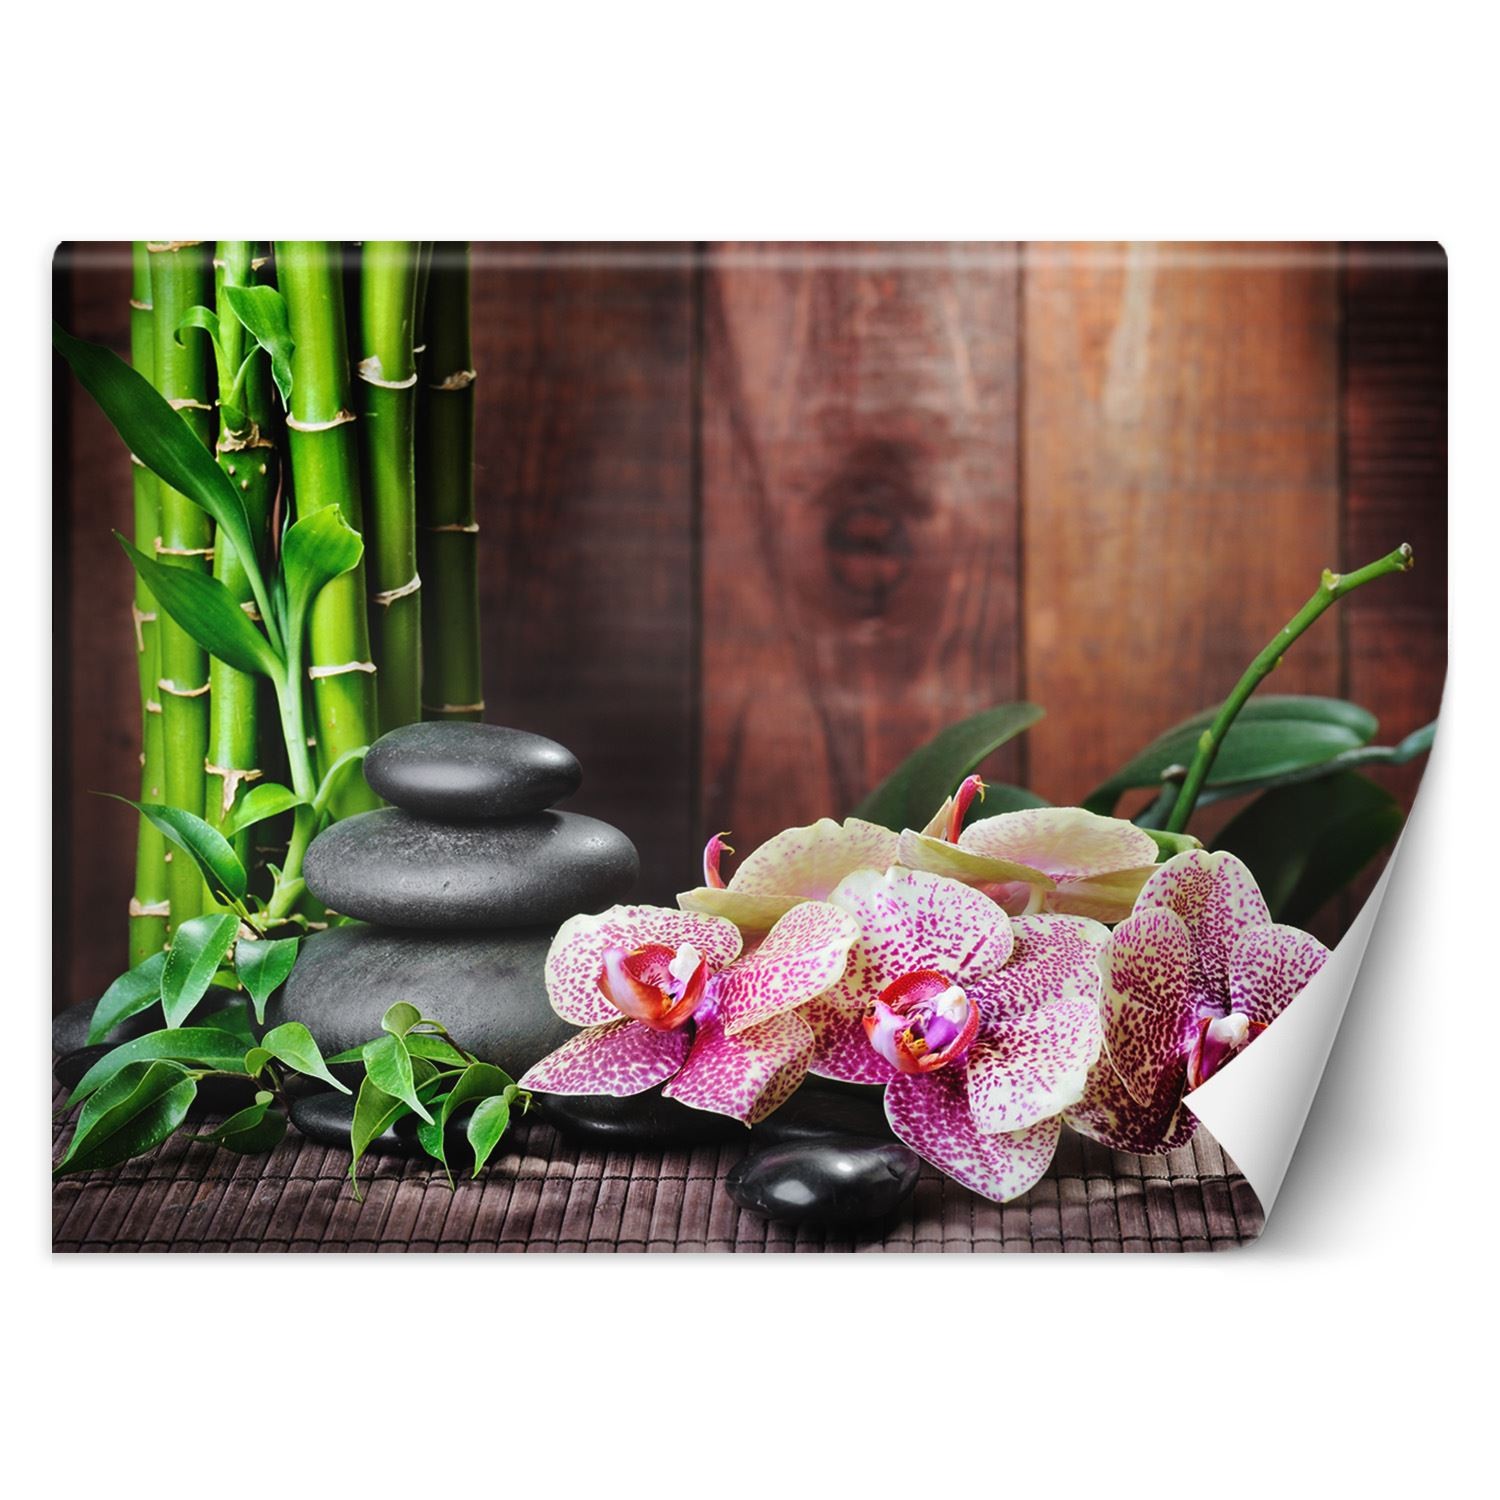 Trend24 – Behang – Orchidee Met Bamboe – Vliesbehang – Fotobehang – Behang Woonkamer – 350x245x2 cm – Incl. behanglijm